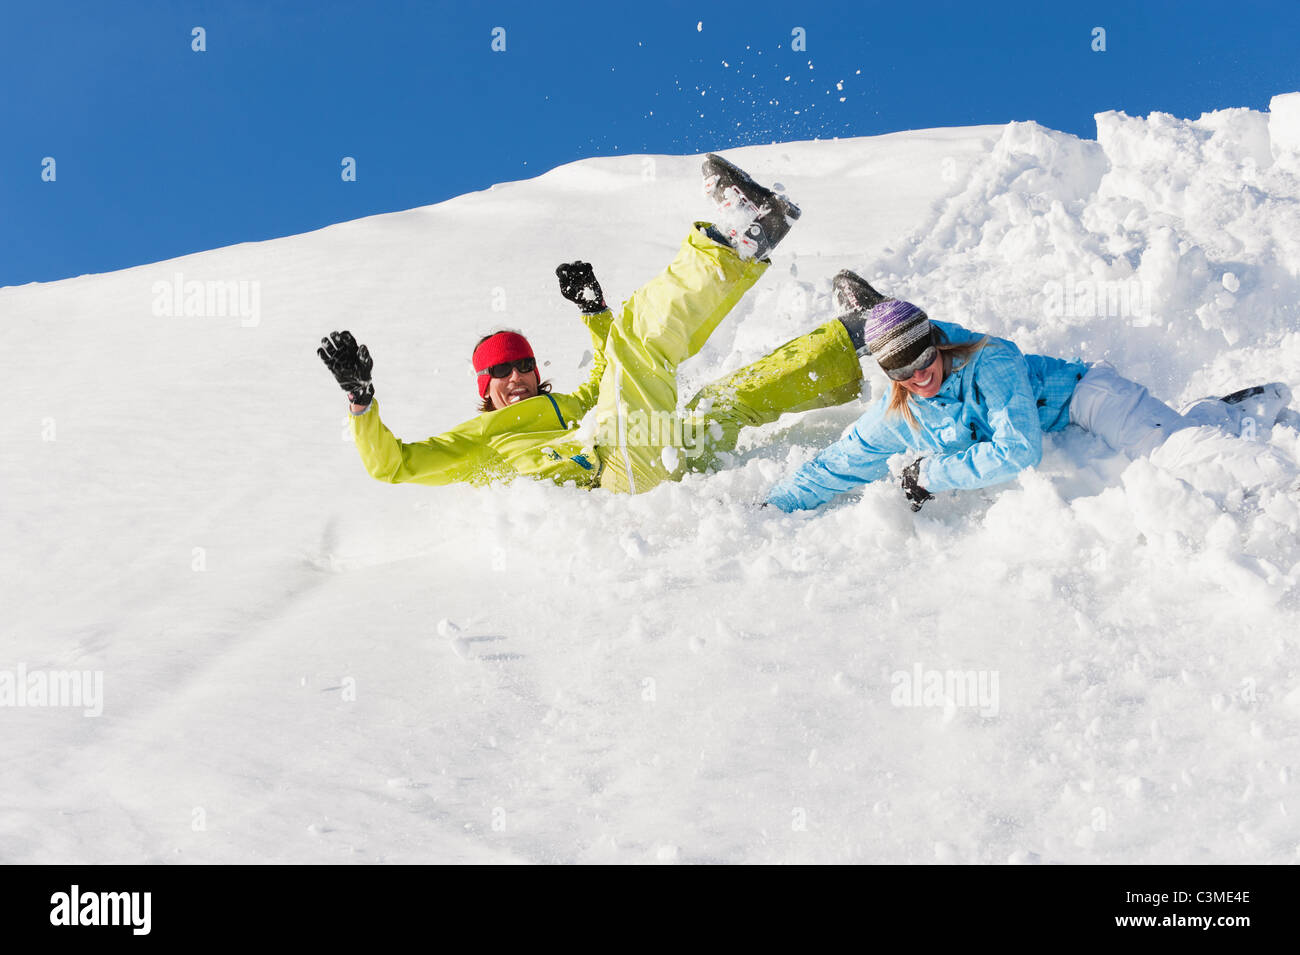 L'Italie, Trentin-Haut-Adige, Alto Adige, Bolzano, Alpe di Siusi, homme et femme sautant sur la neige Banque D'Images